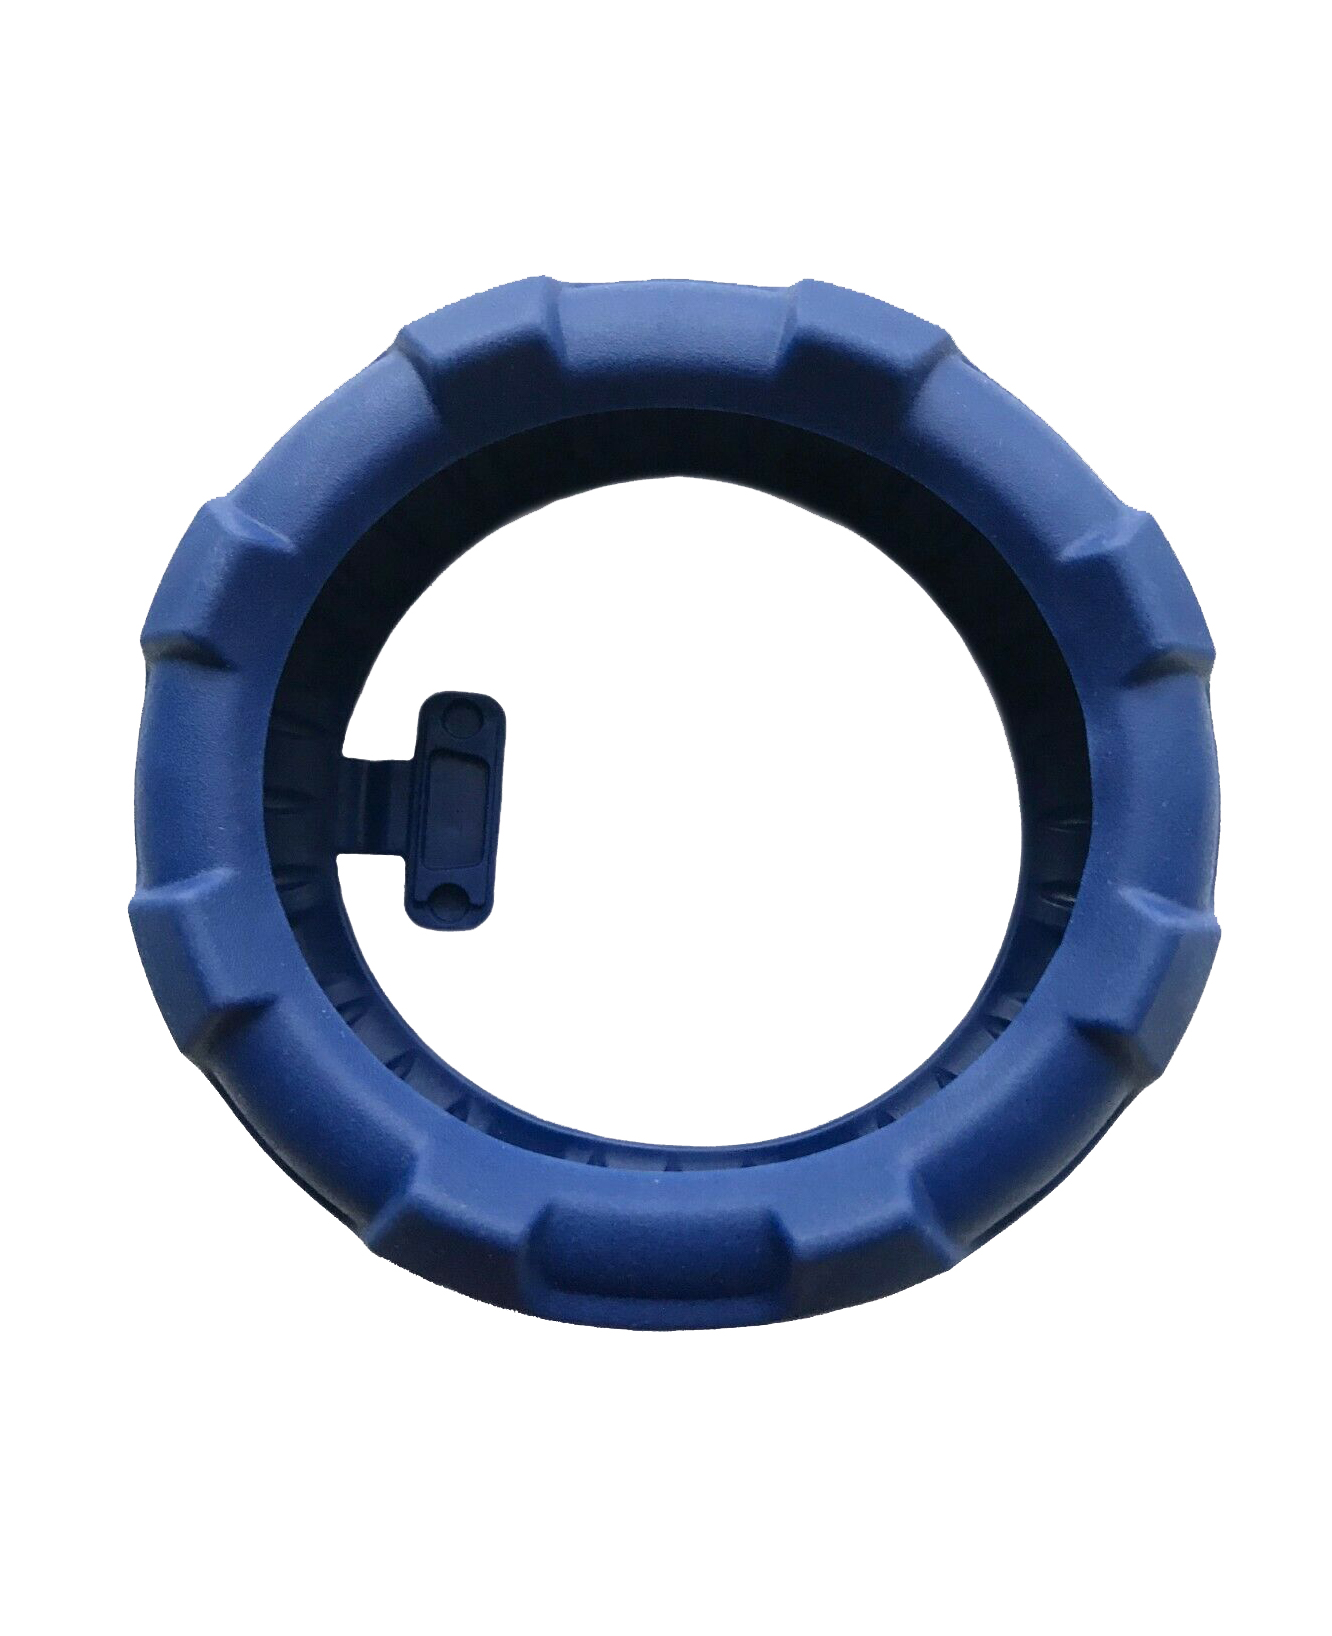 Crystal 3696 Blue Protective Boot for XP2i Pressure Gauge